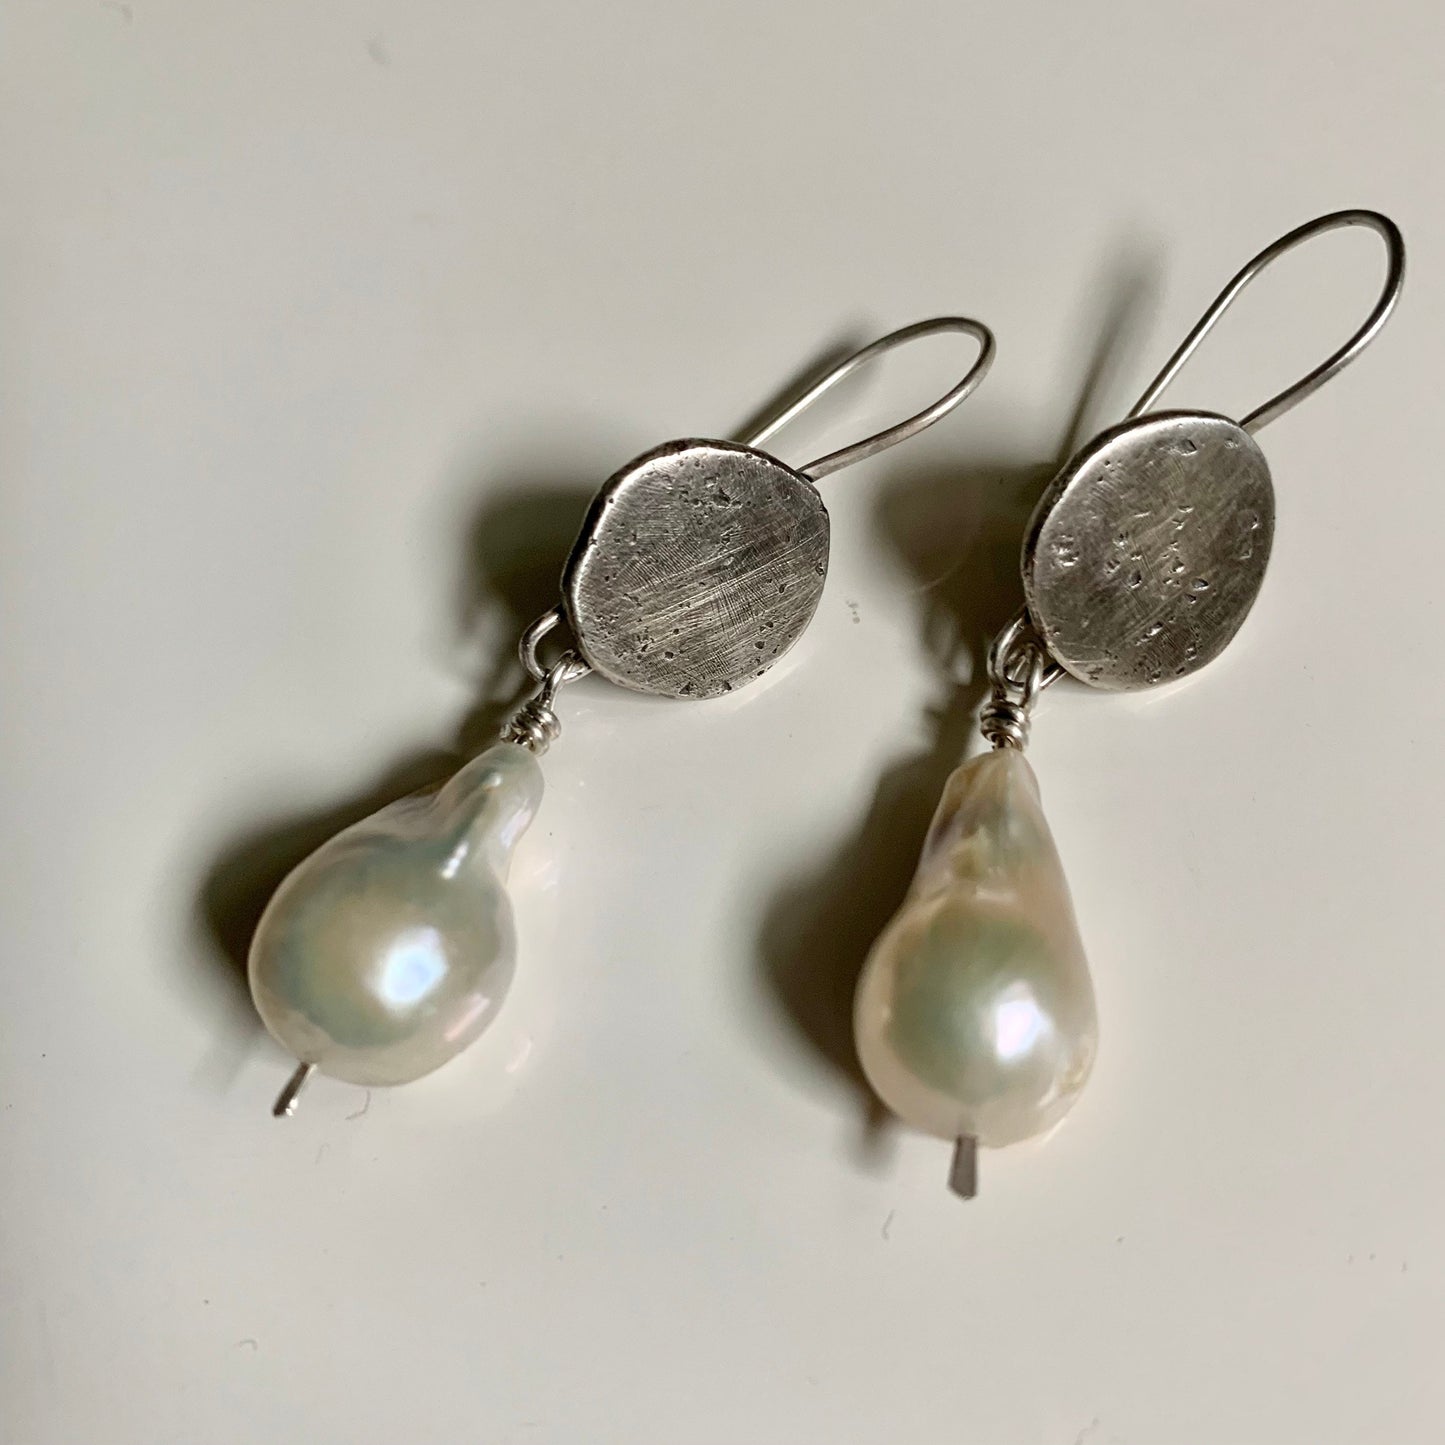 Pearl earrings - baroque freshwater pearl with sterling silver - boho dangle earrings  - handmade silver earrings for women - gift for her